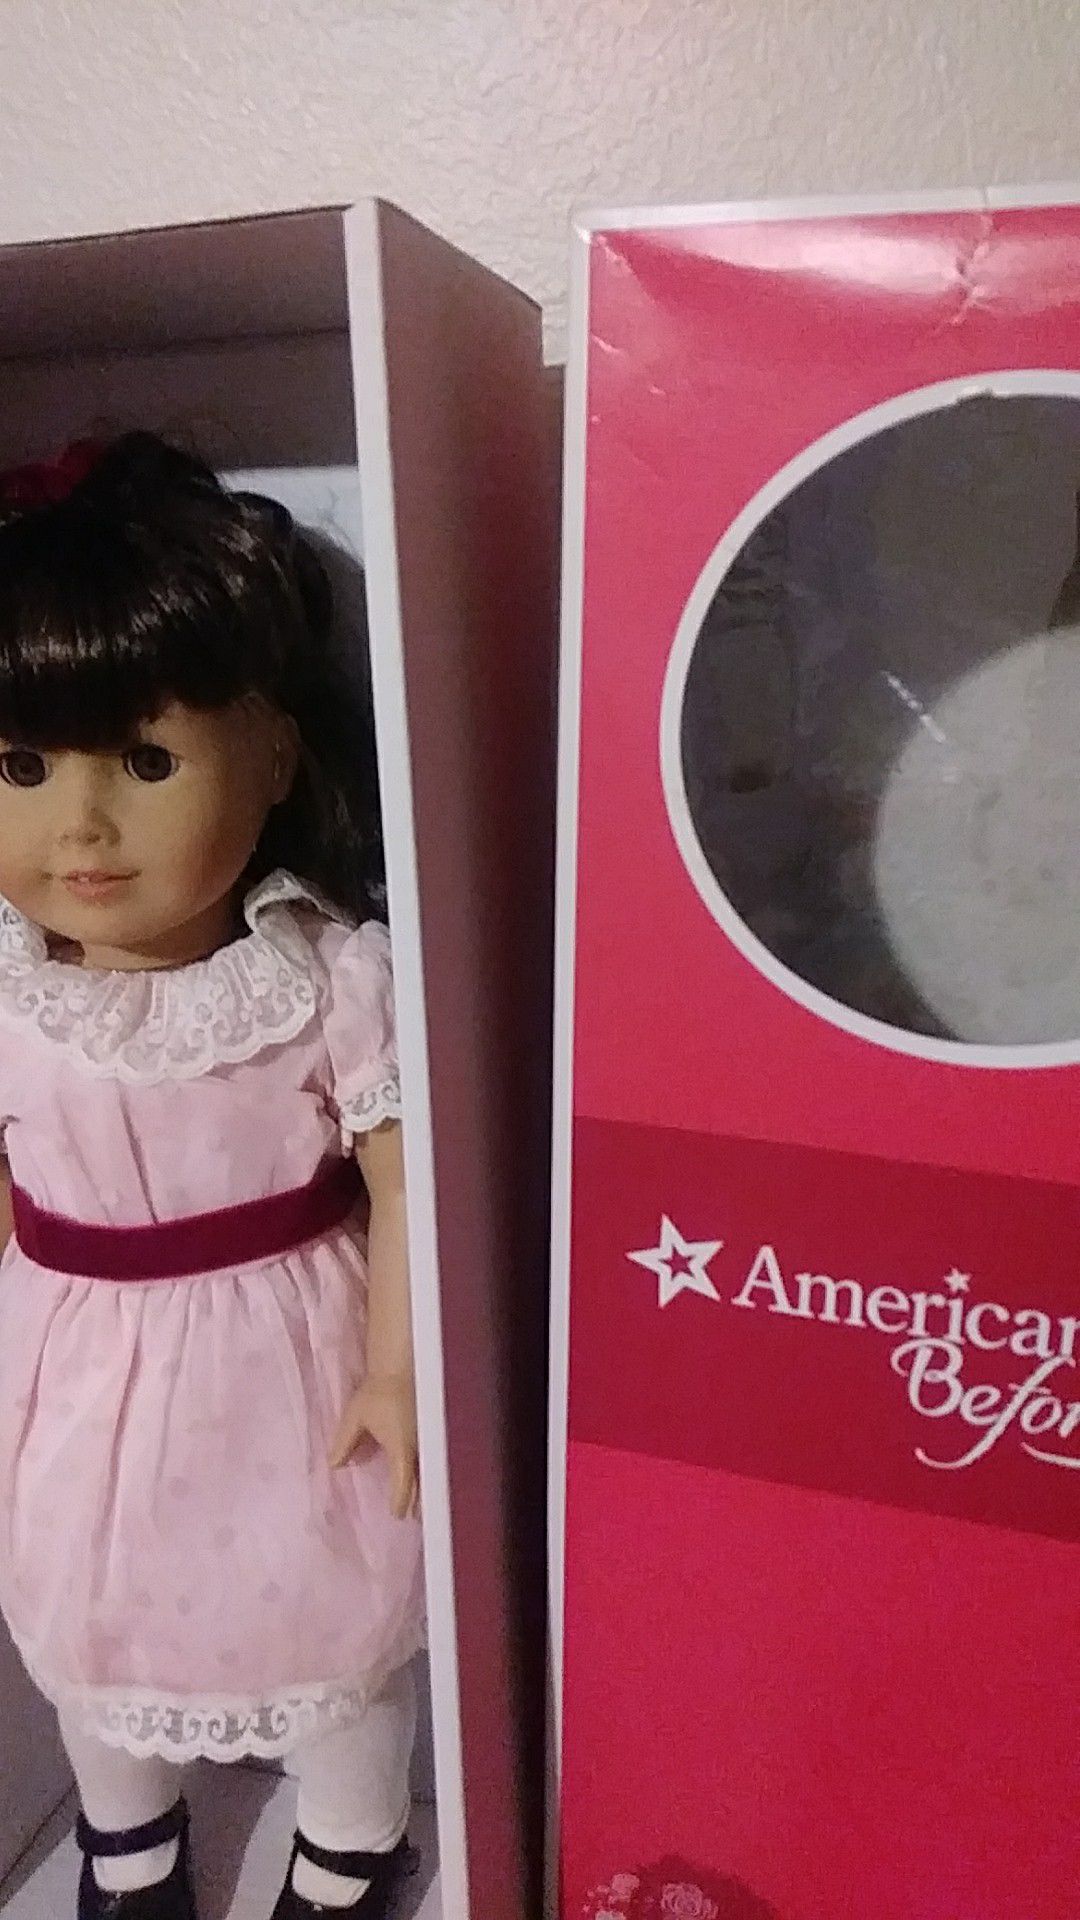 American Girl doll Samantha